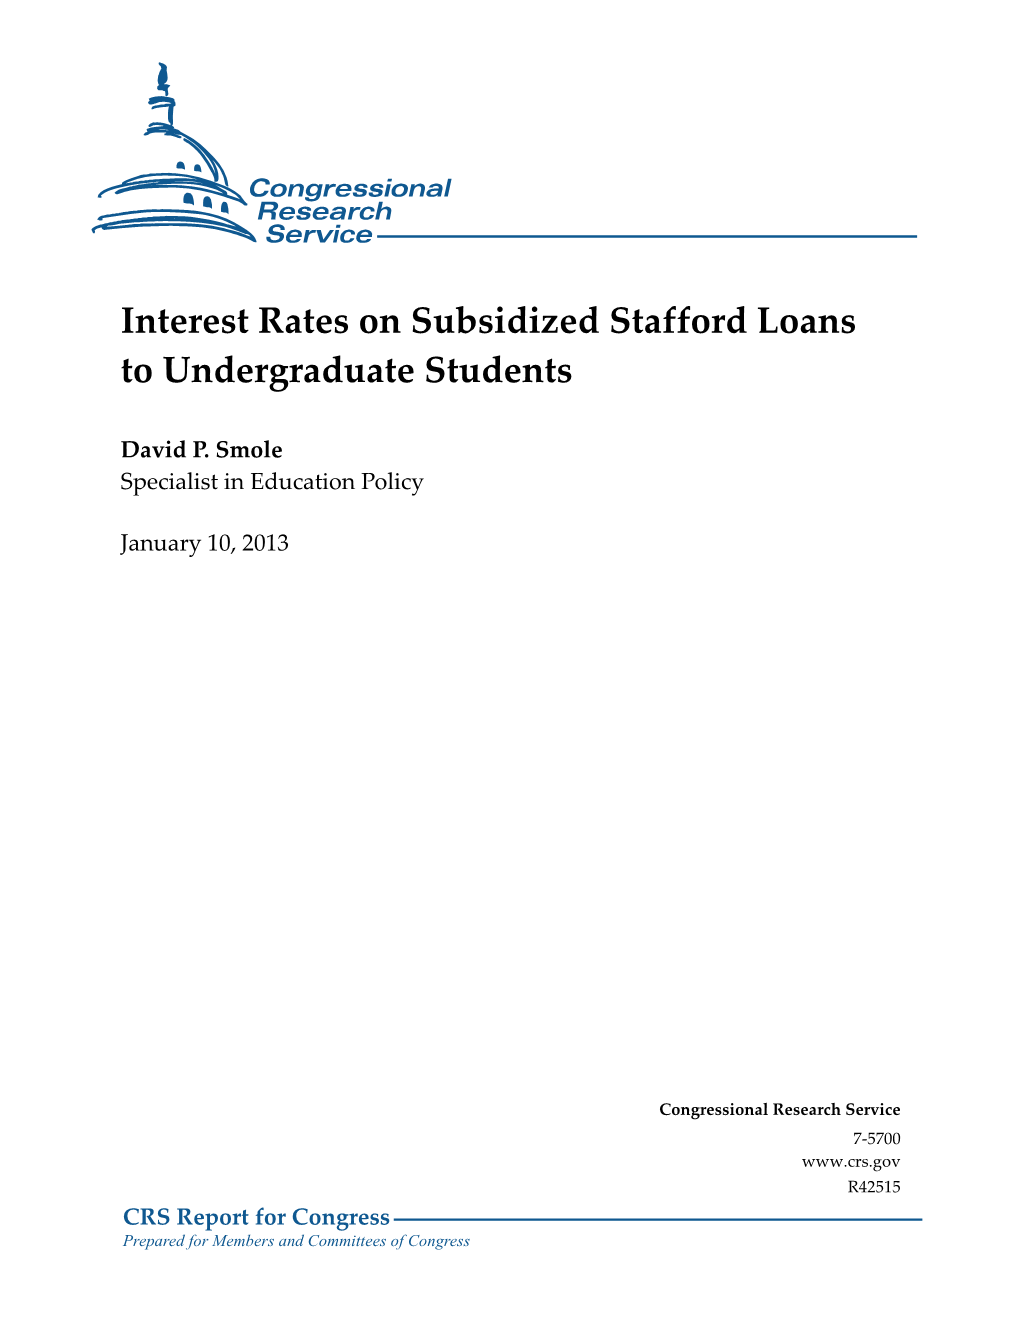 Interest Rates on Subsidized Stafford Loans to Undergraduate Students